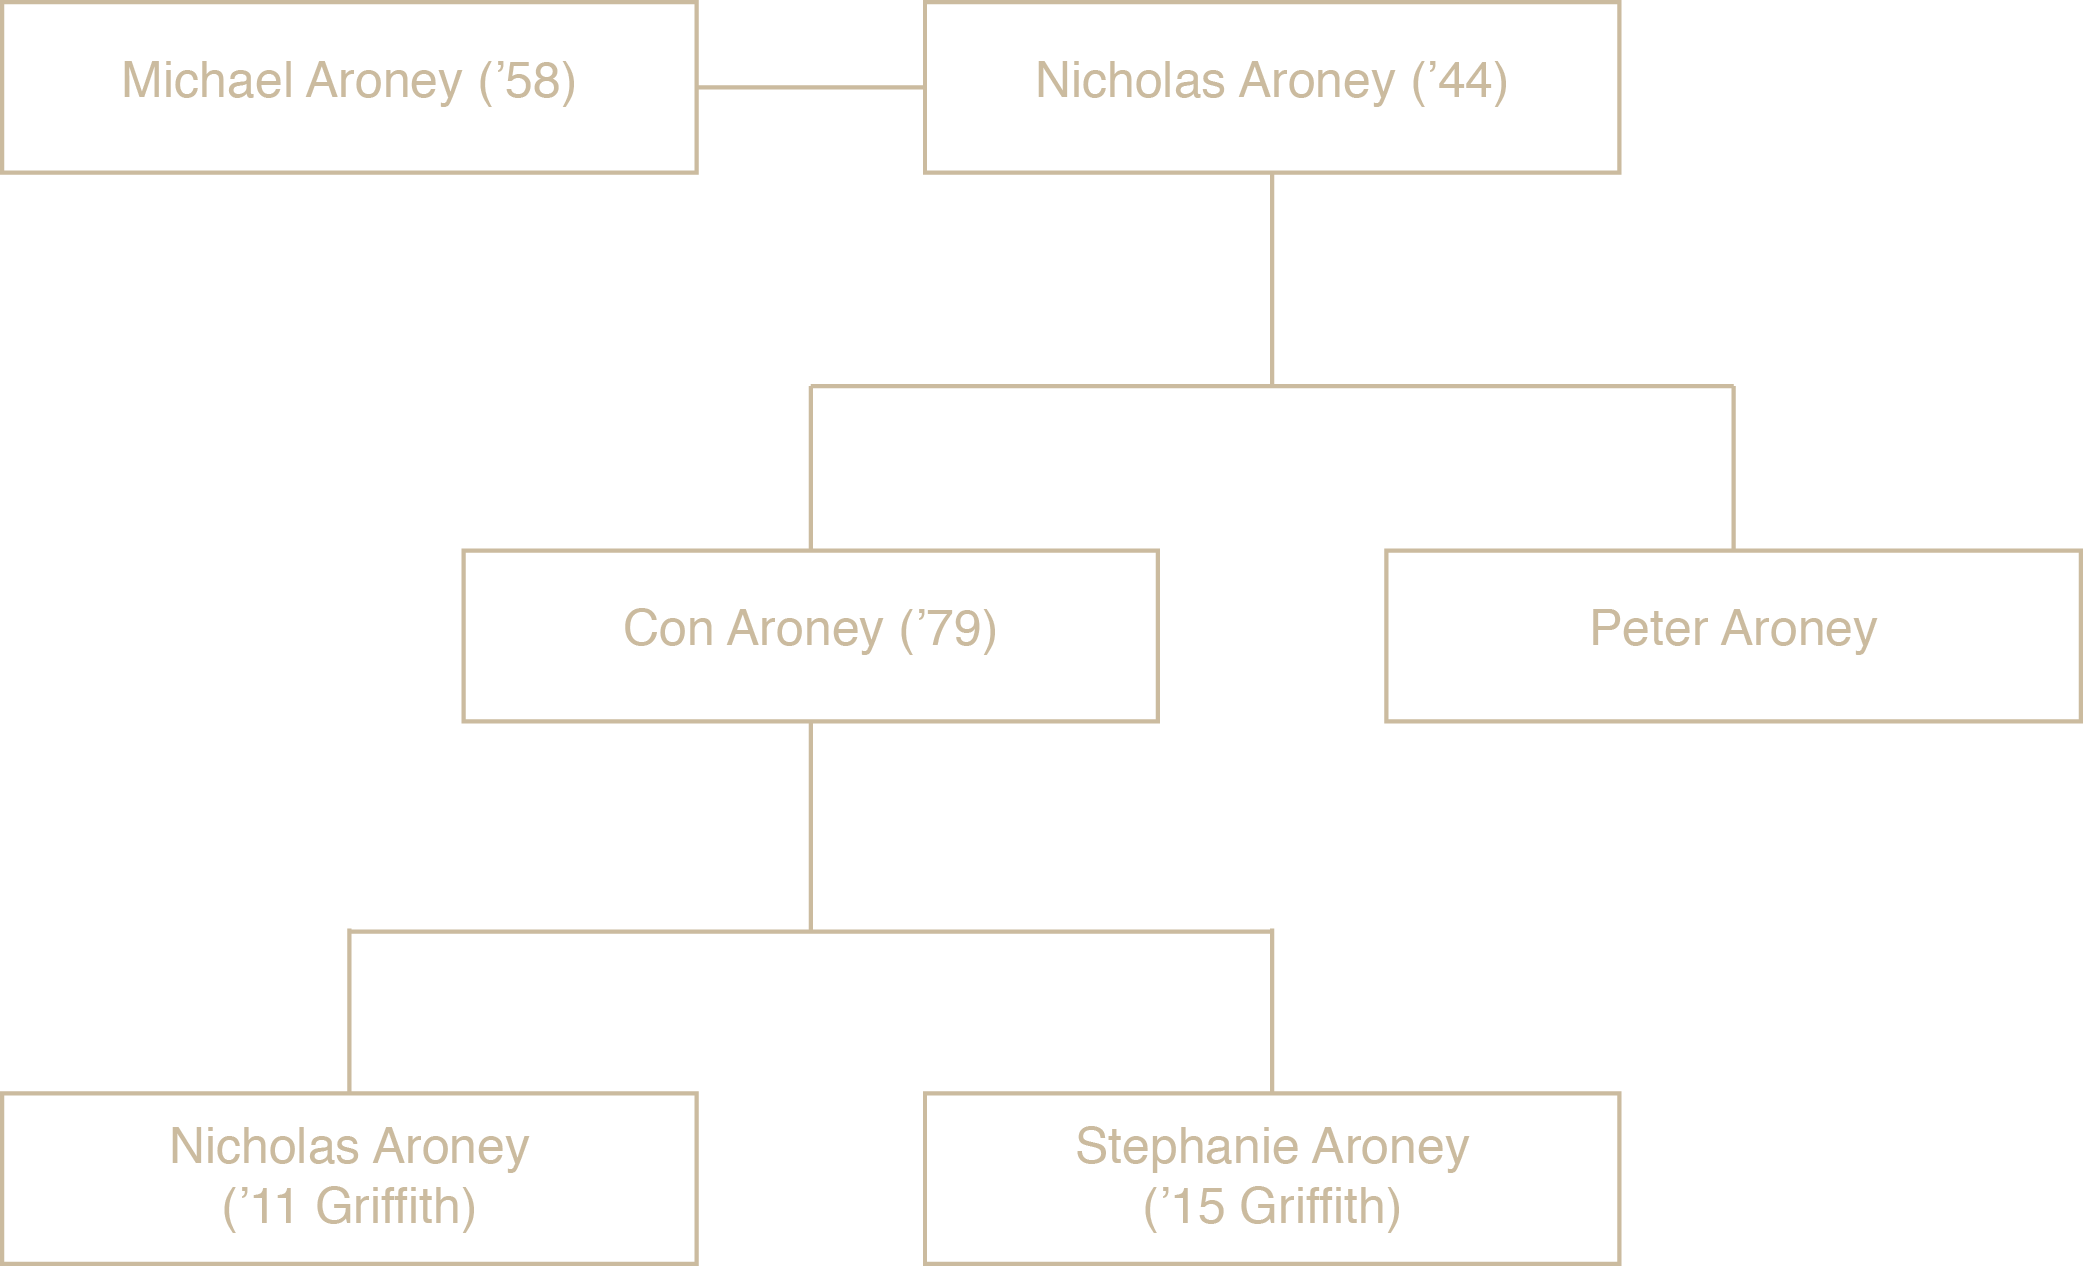 Aroney family tree